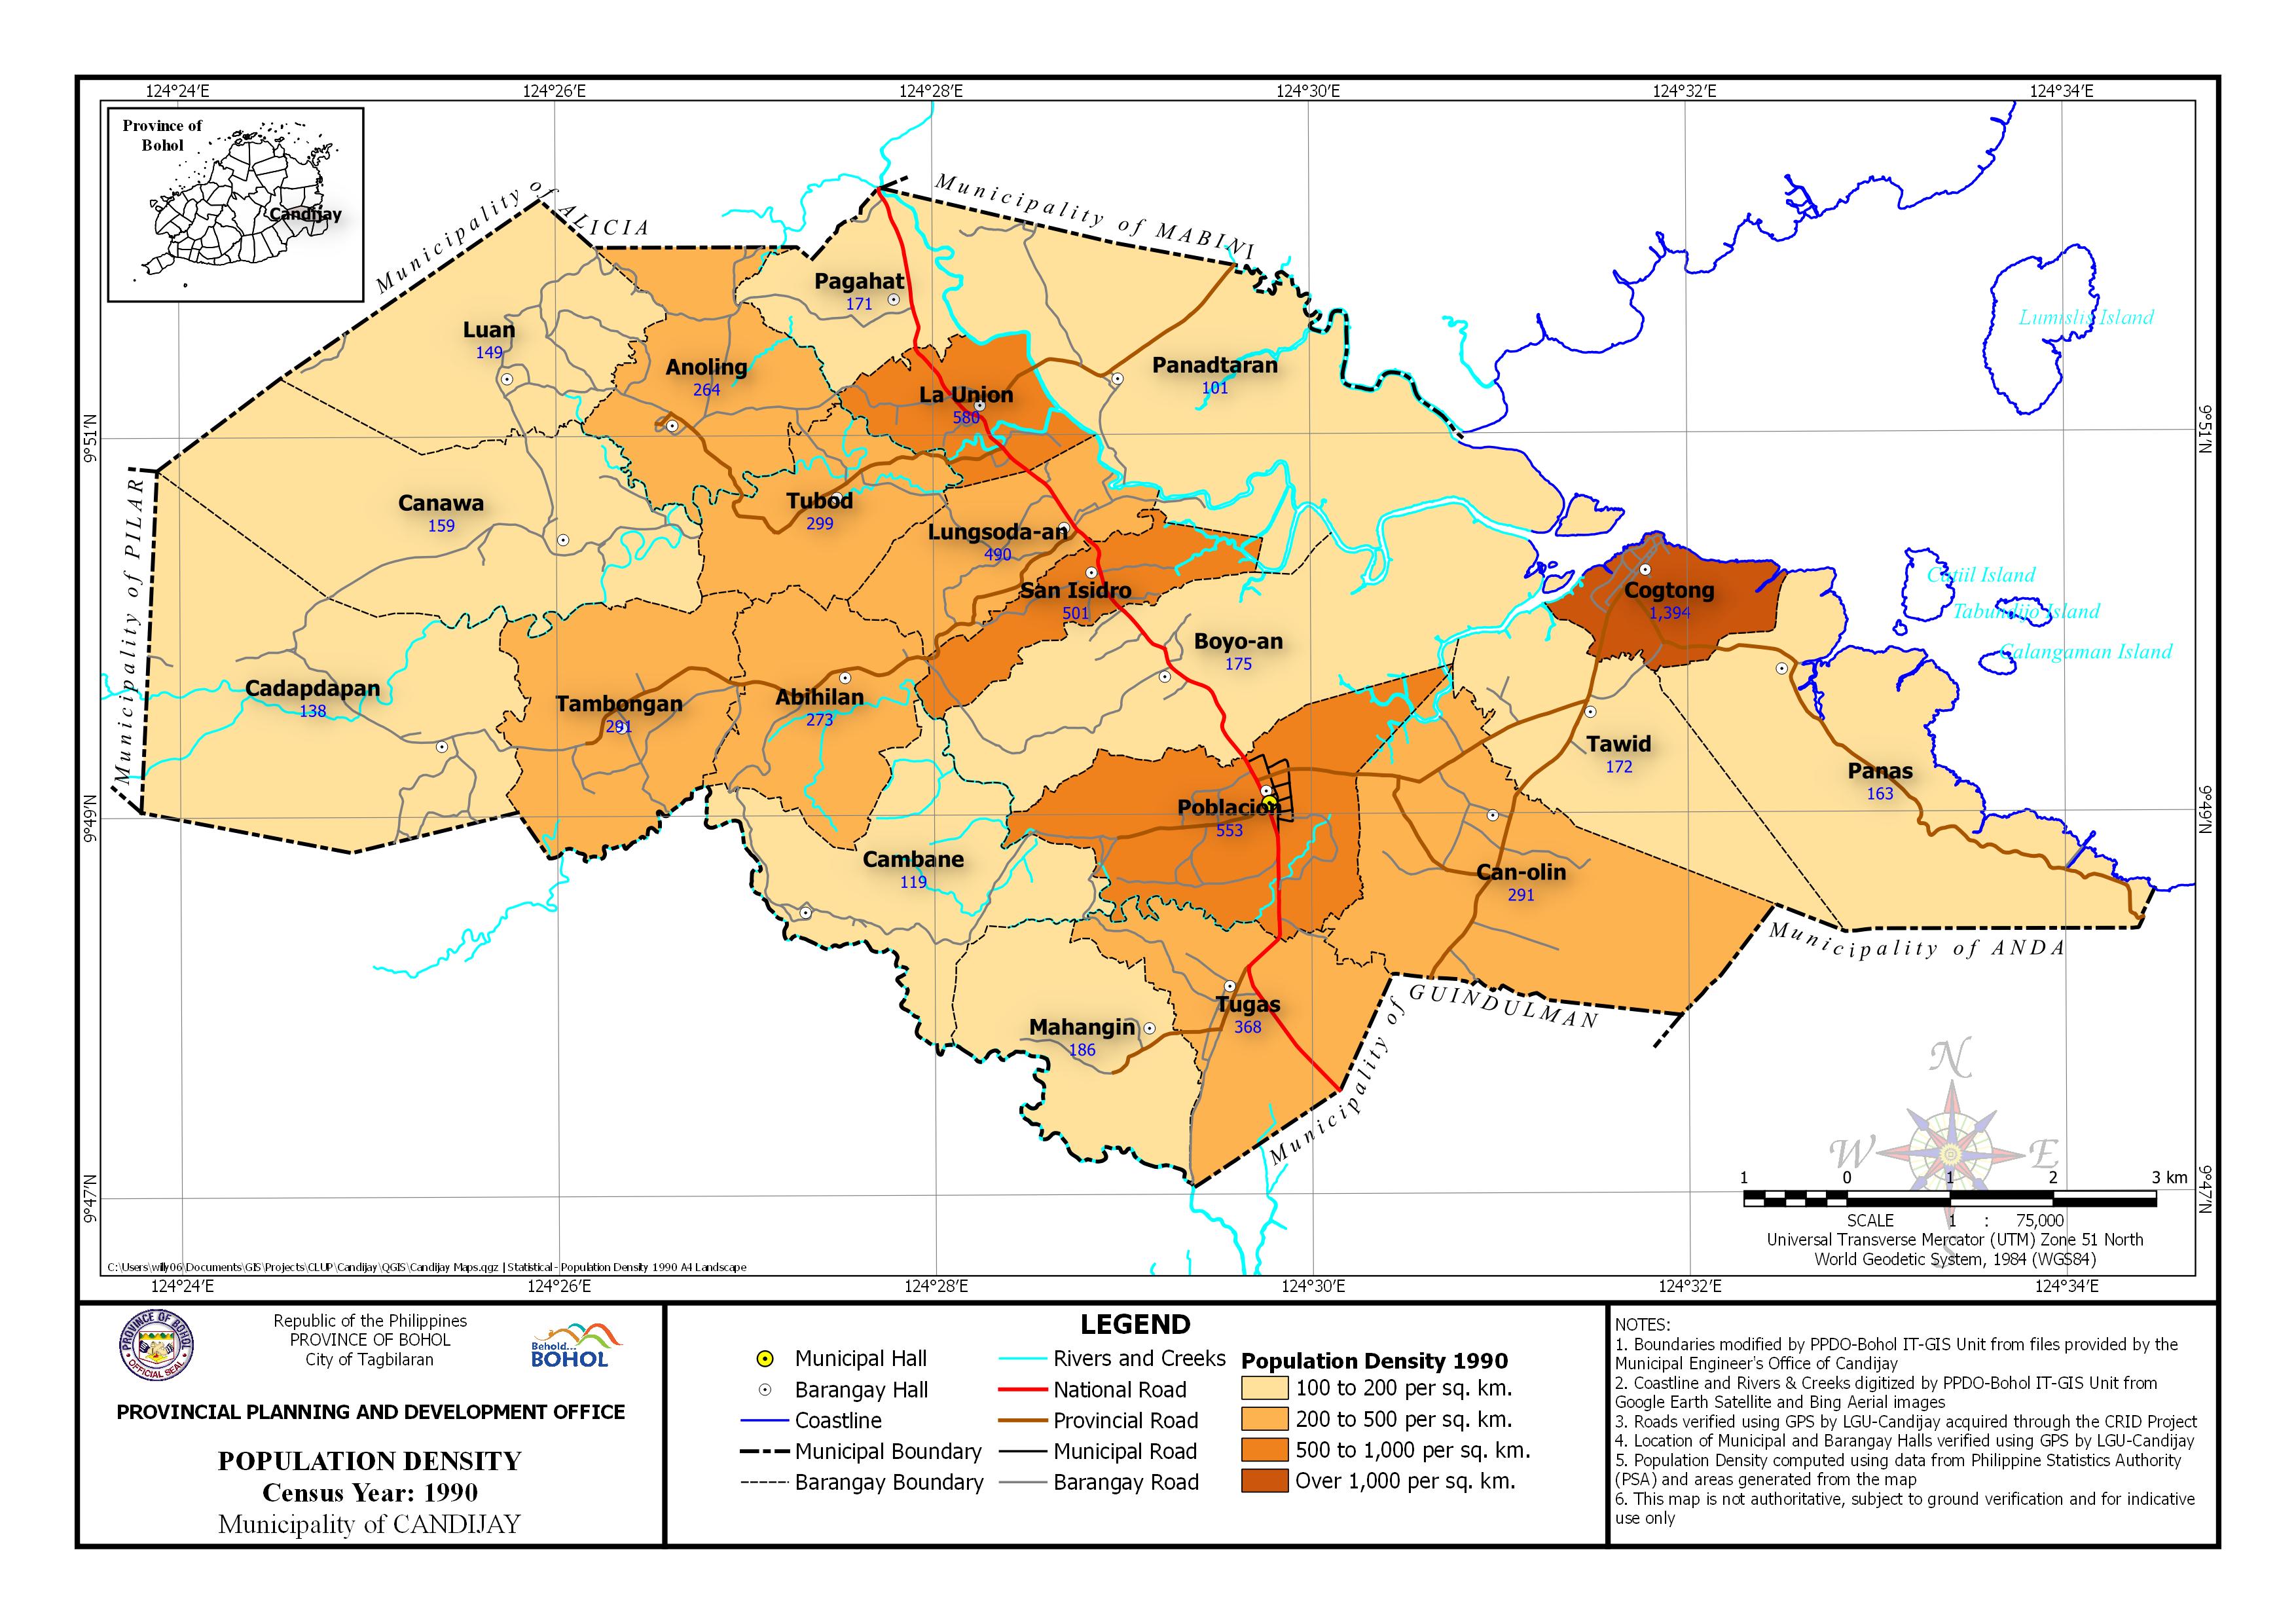 Population Density Census Year: 1990-1995